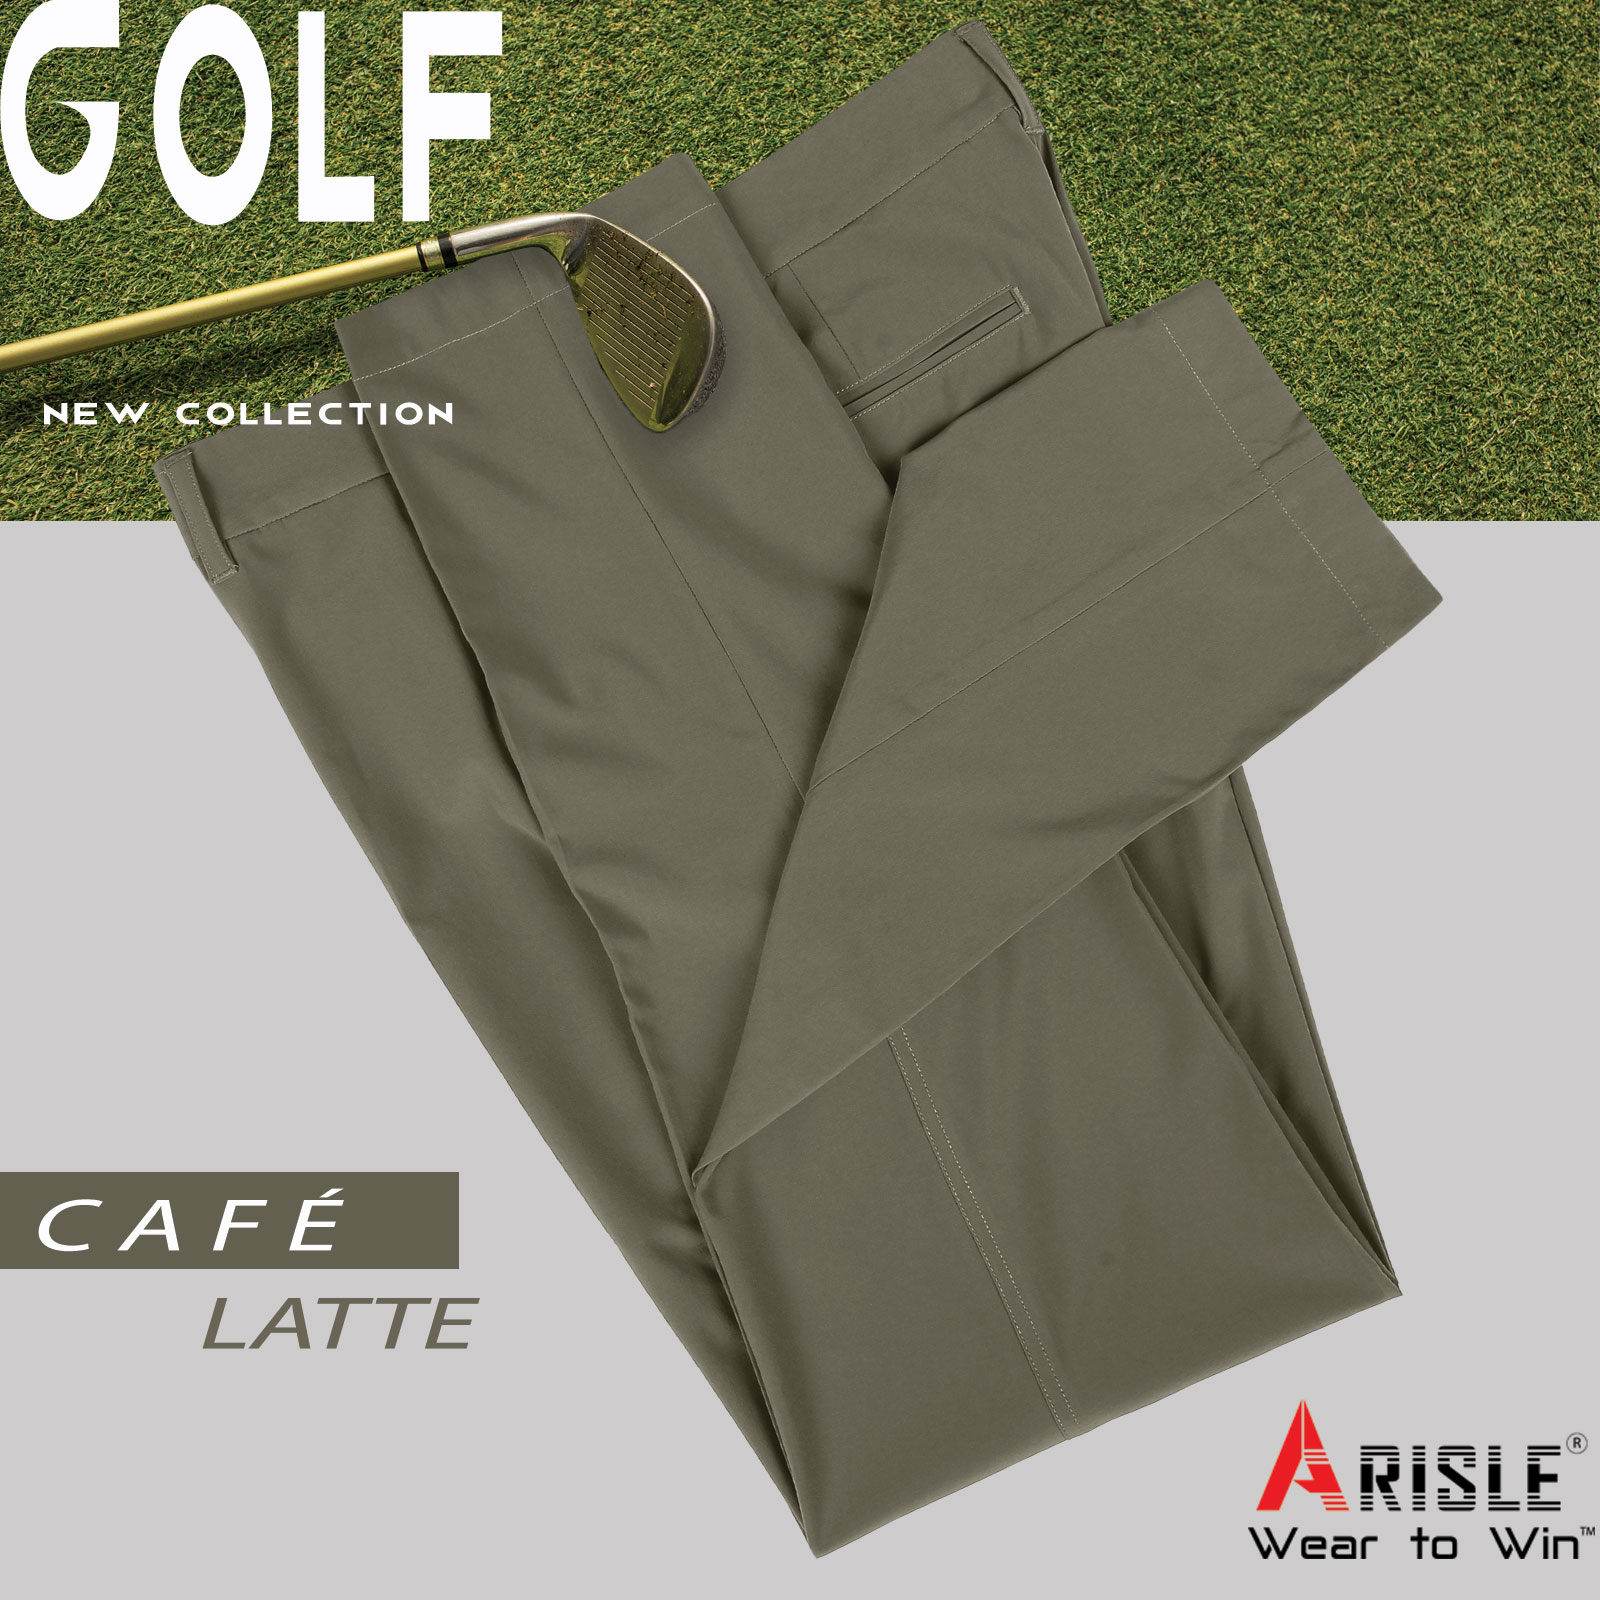 Quan-Golf-ARISLE-Ultra-Comfy-Cafe-Latte-8